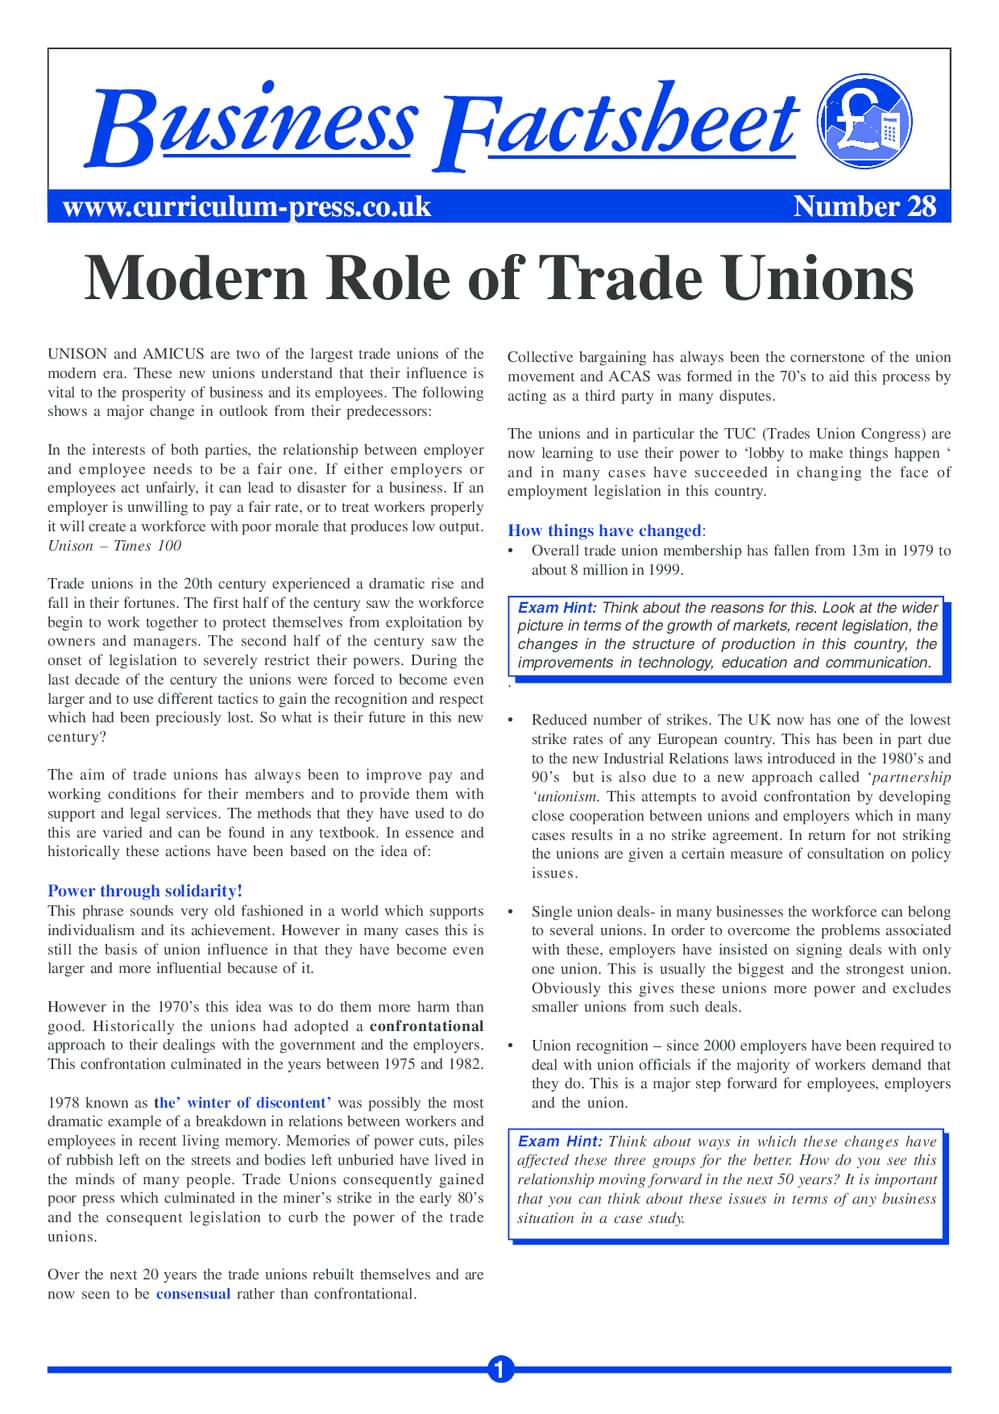 28 Mod Role Trade Unions